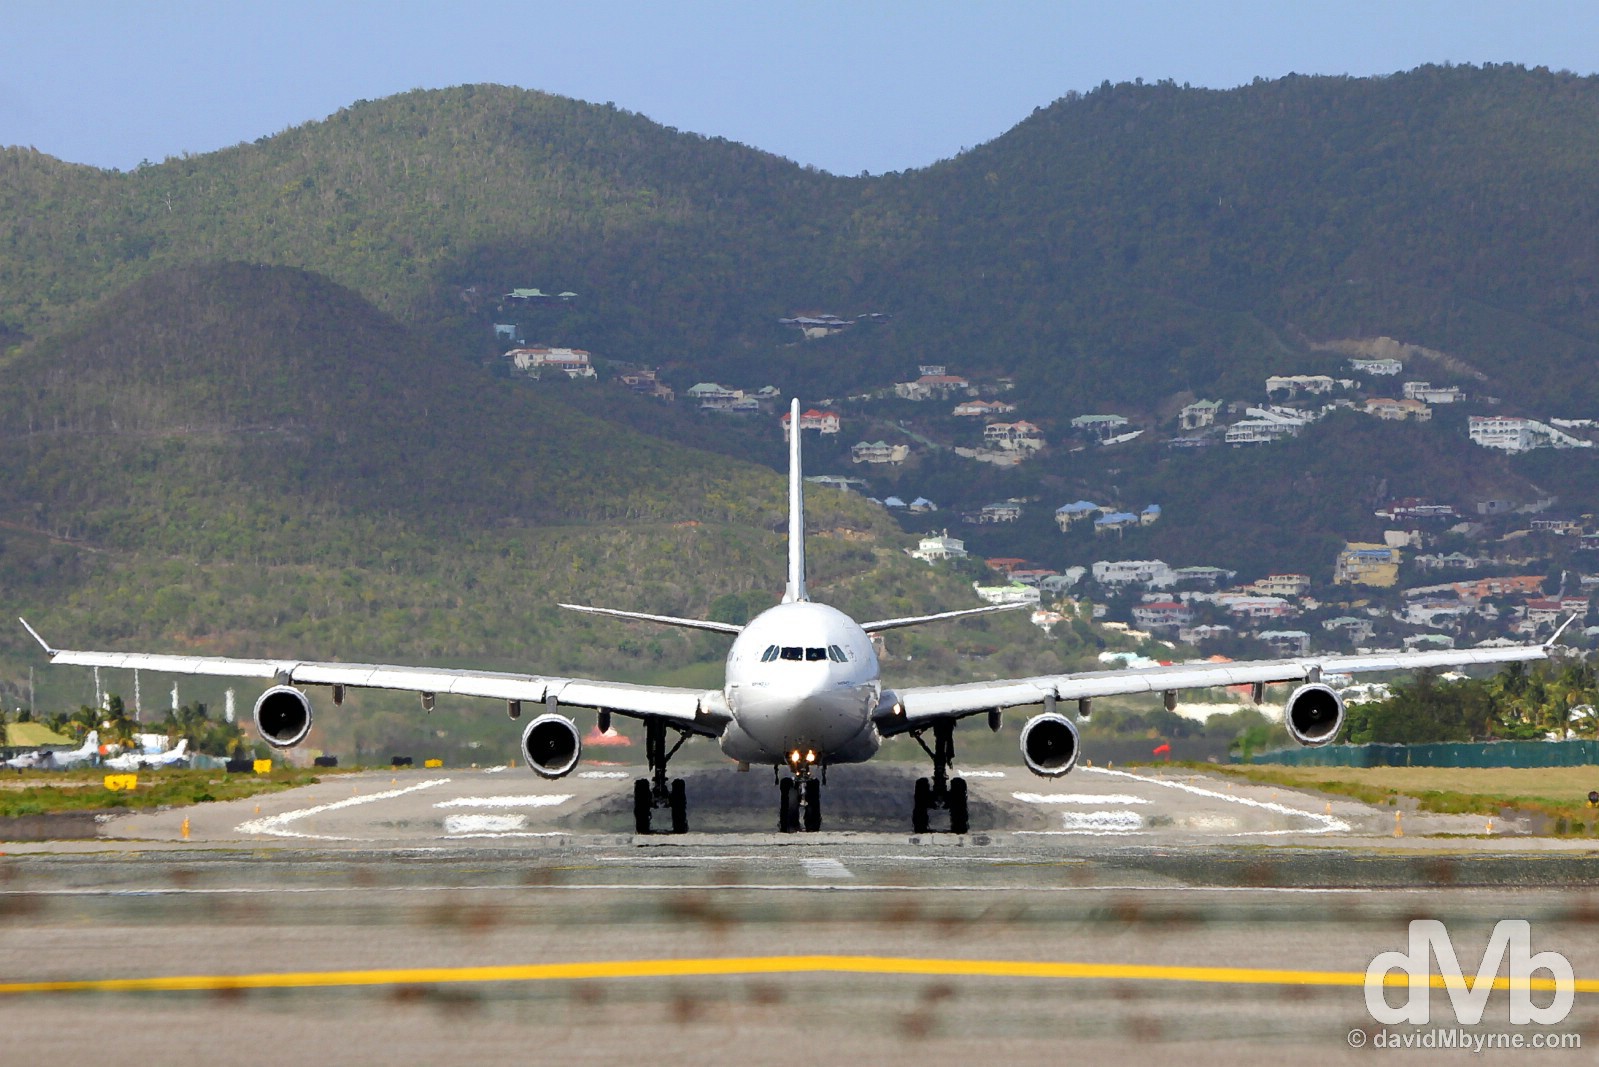 Taxiing for take-off at Juliana Airport, Sint Maarten, Lesser Antilles. June 8, 2015.